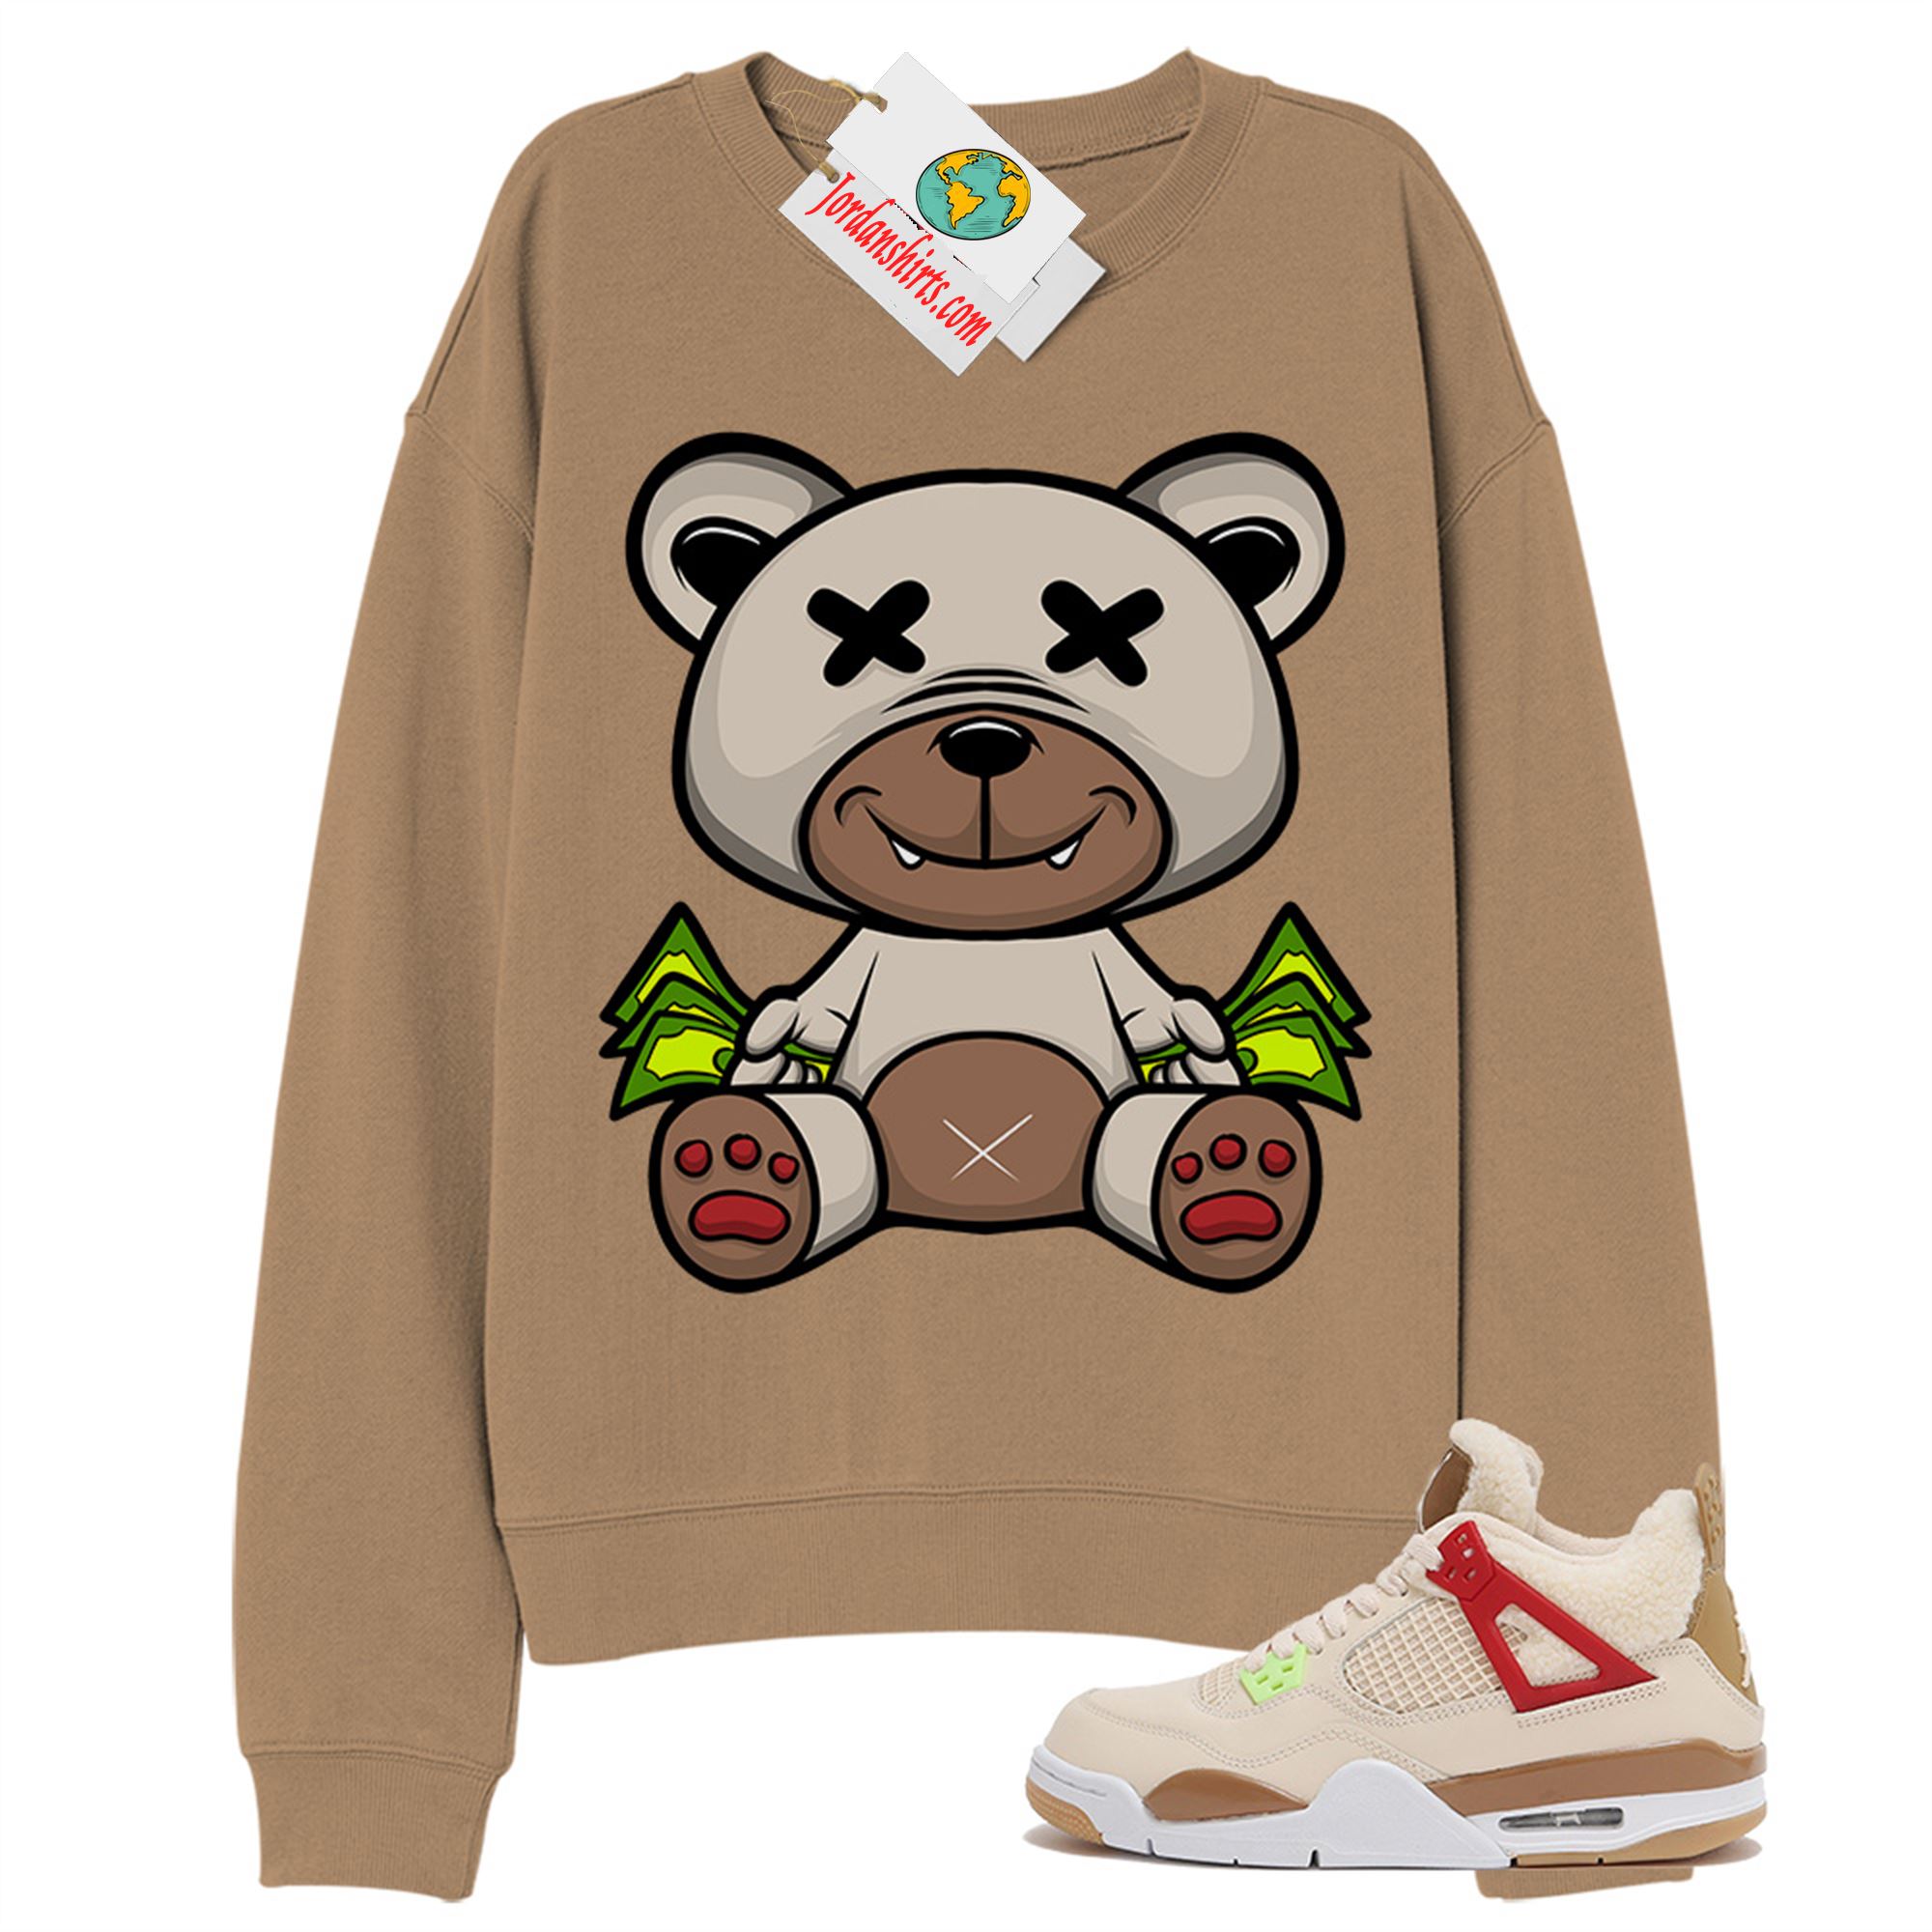 Jordan 4 Sweatshirt, Rich Teddy Bear Sandstone Sweatshirt Air Jordan 4 Wild Things 4s Size Up To 5xl